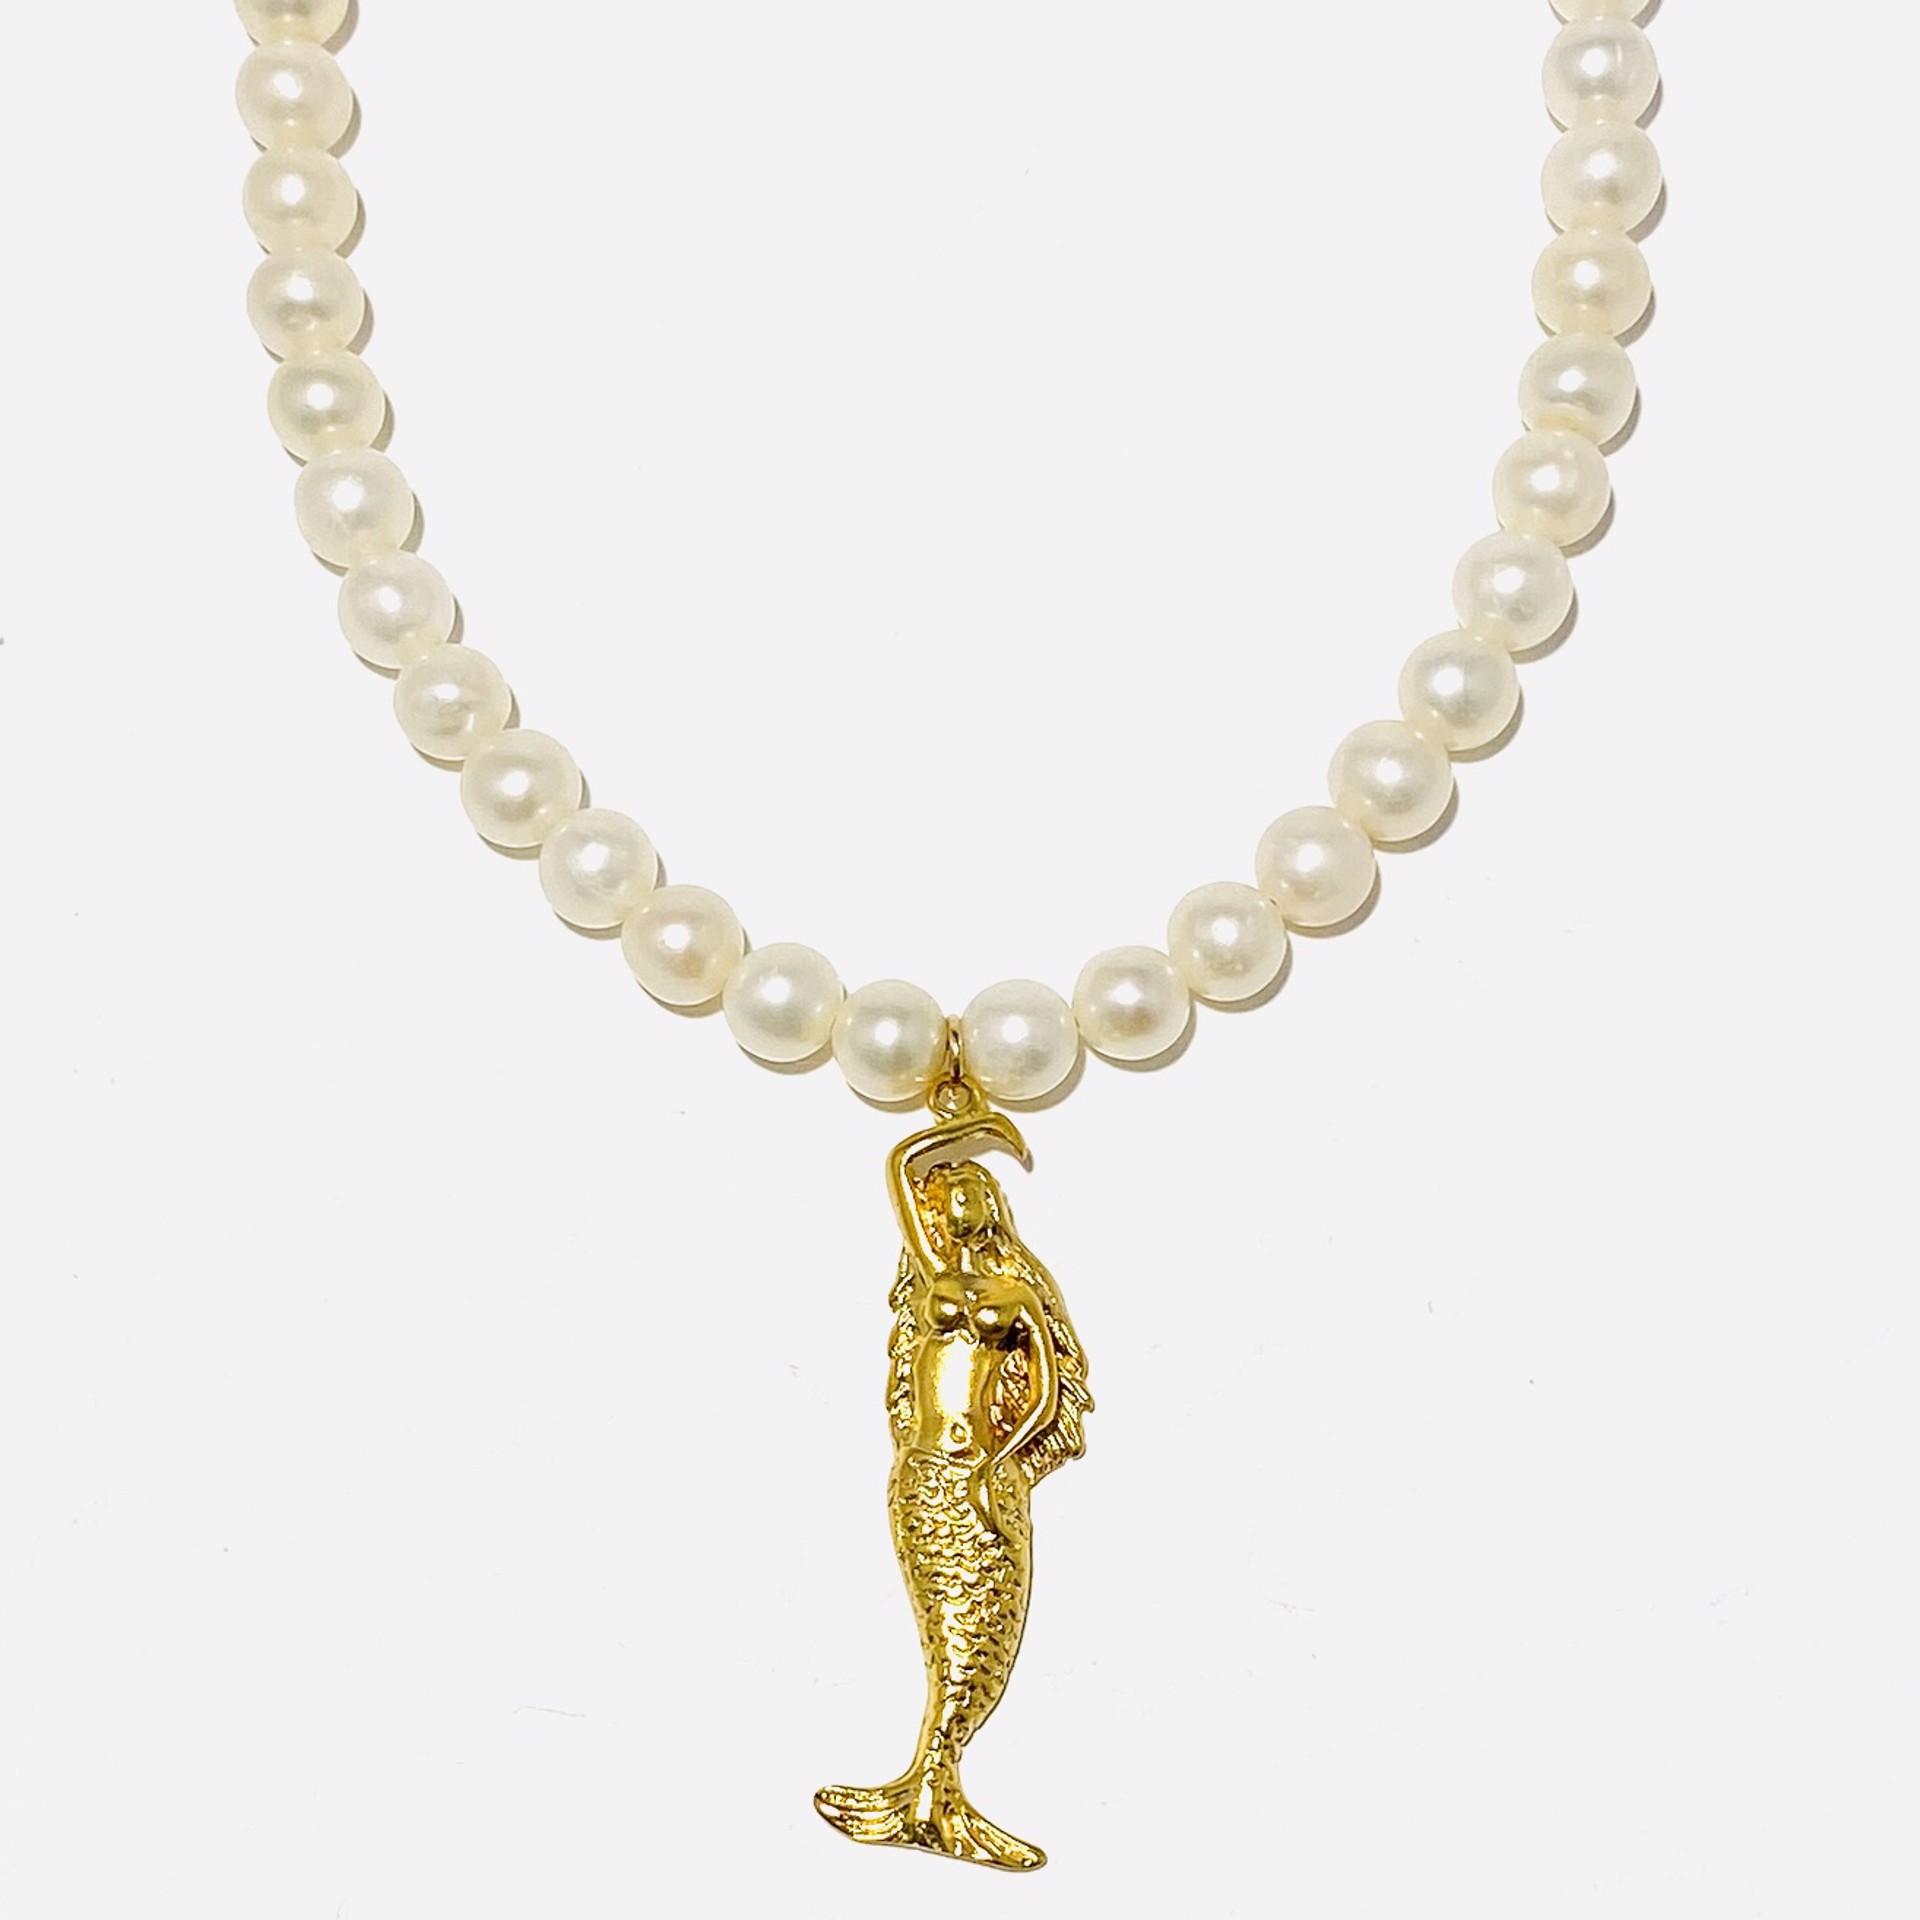 Round White Pearl Vermeil Mermaid Pendant Necklace by Nance Trueworthy